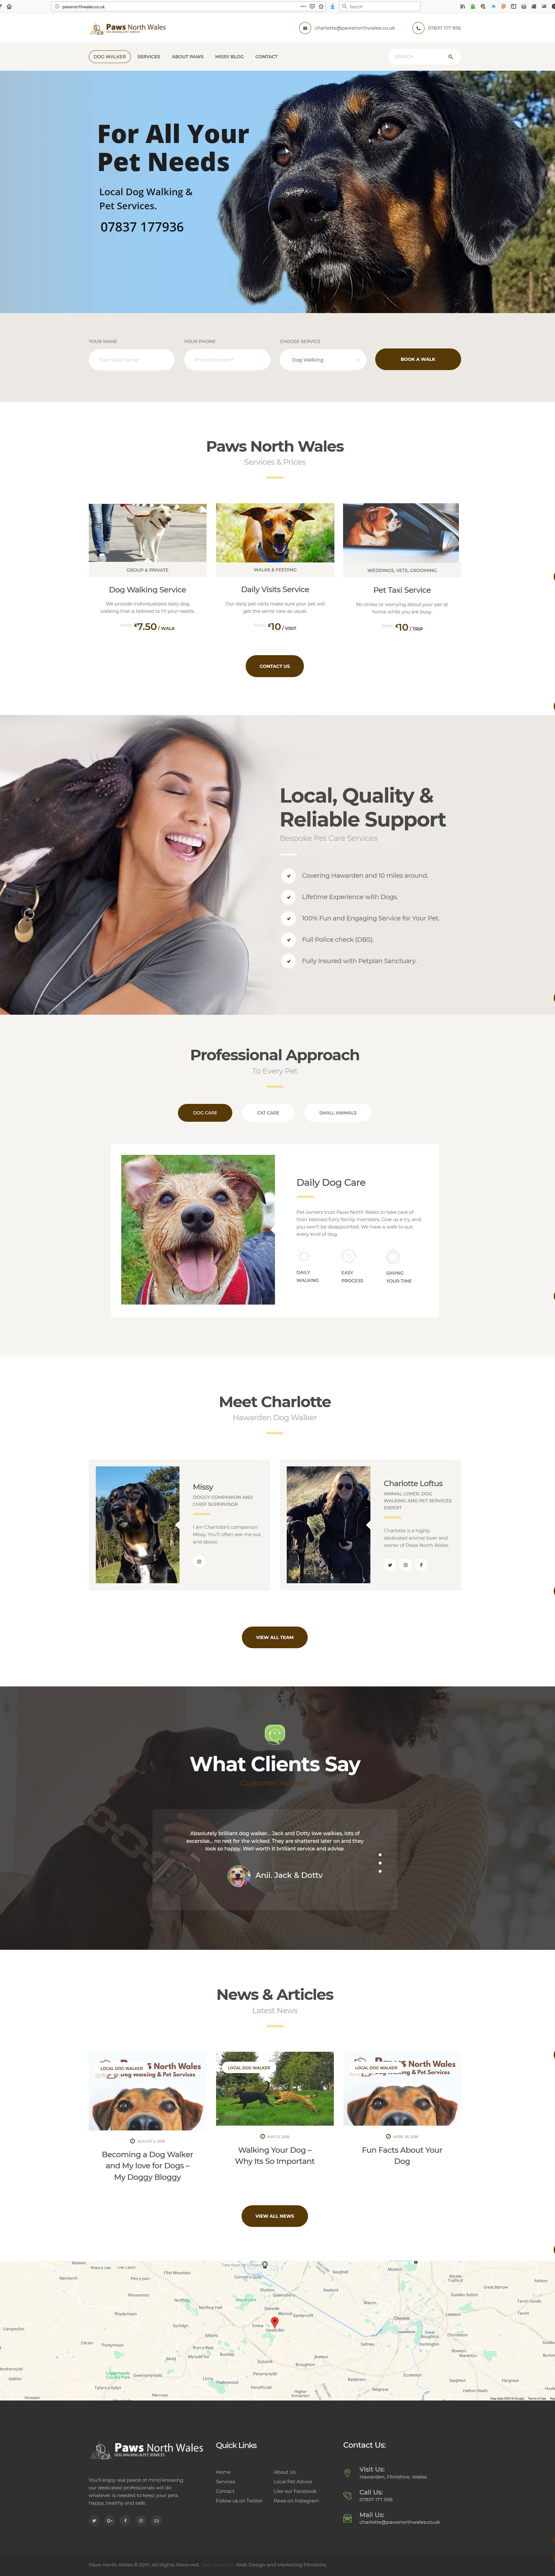 website for someone startinga dog walking company